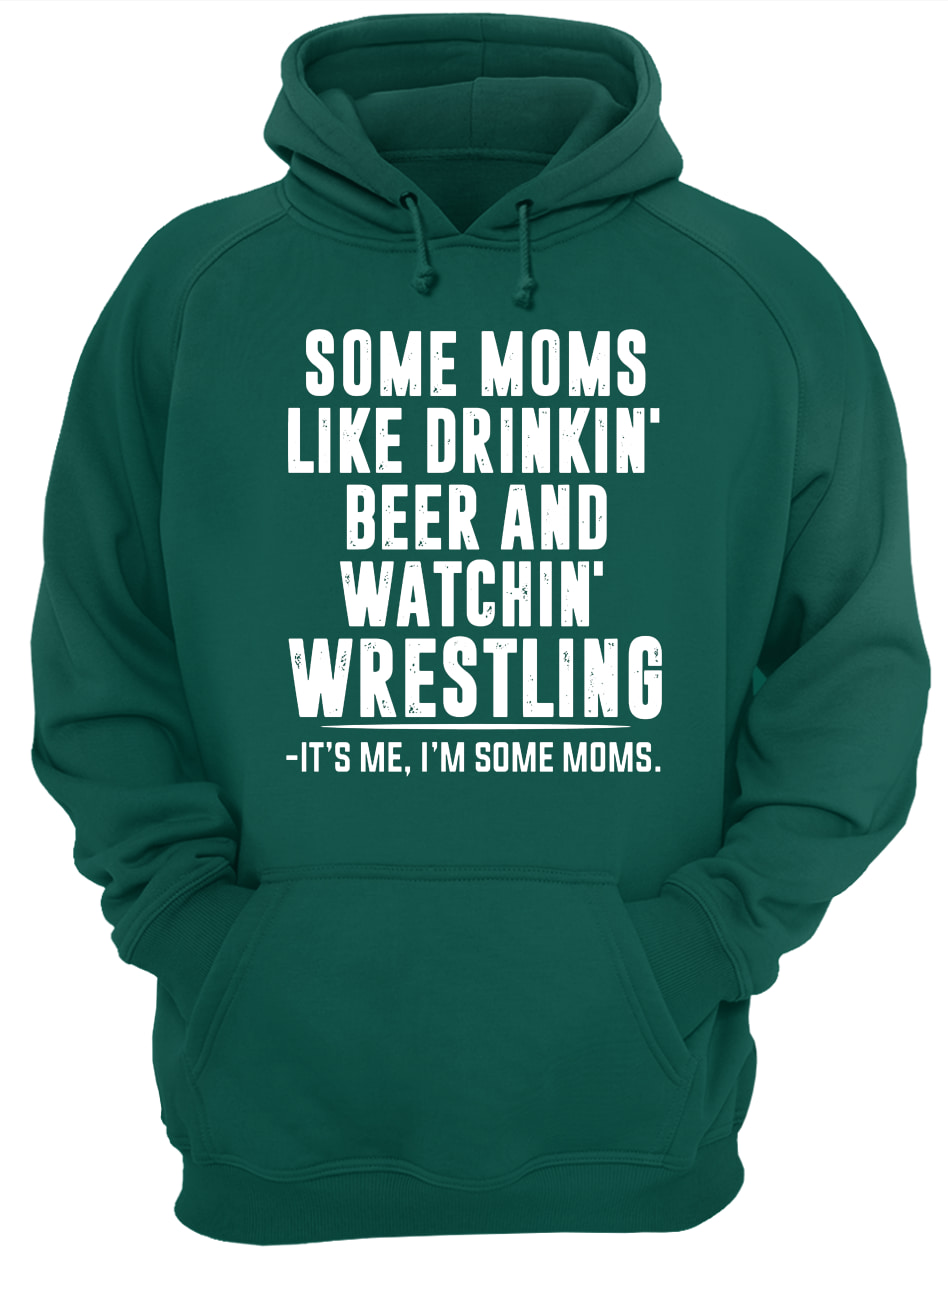 Some moms like drinkin' beer and watchin' wrestling hoodie